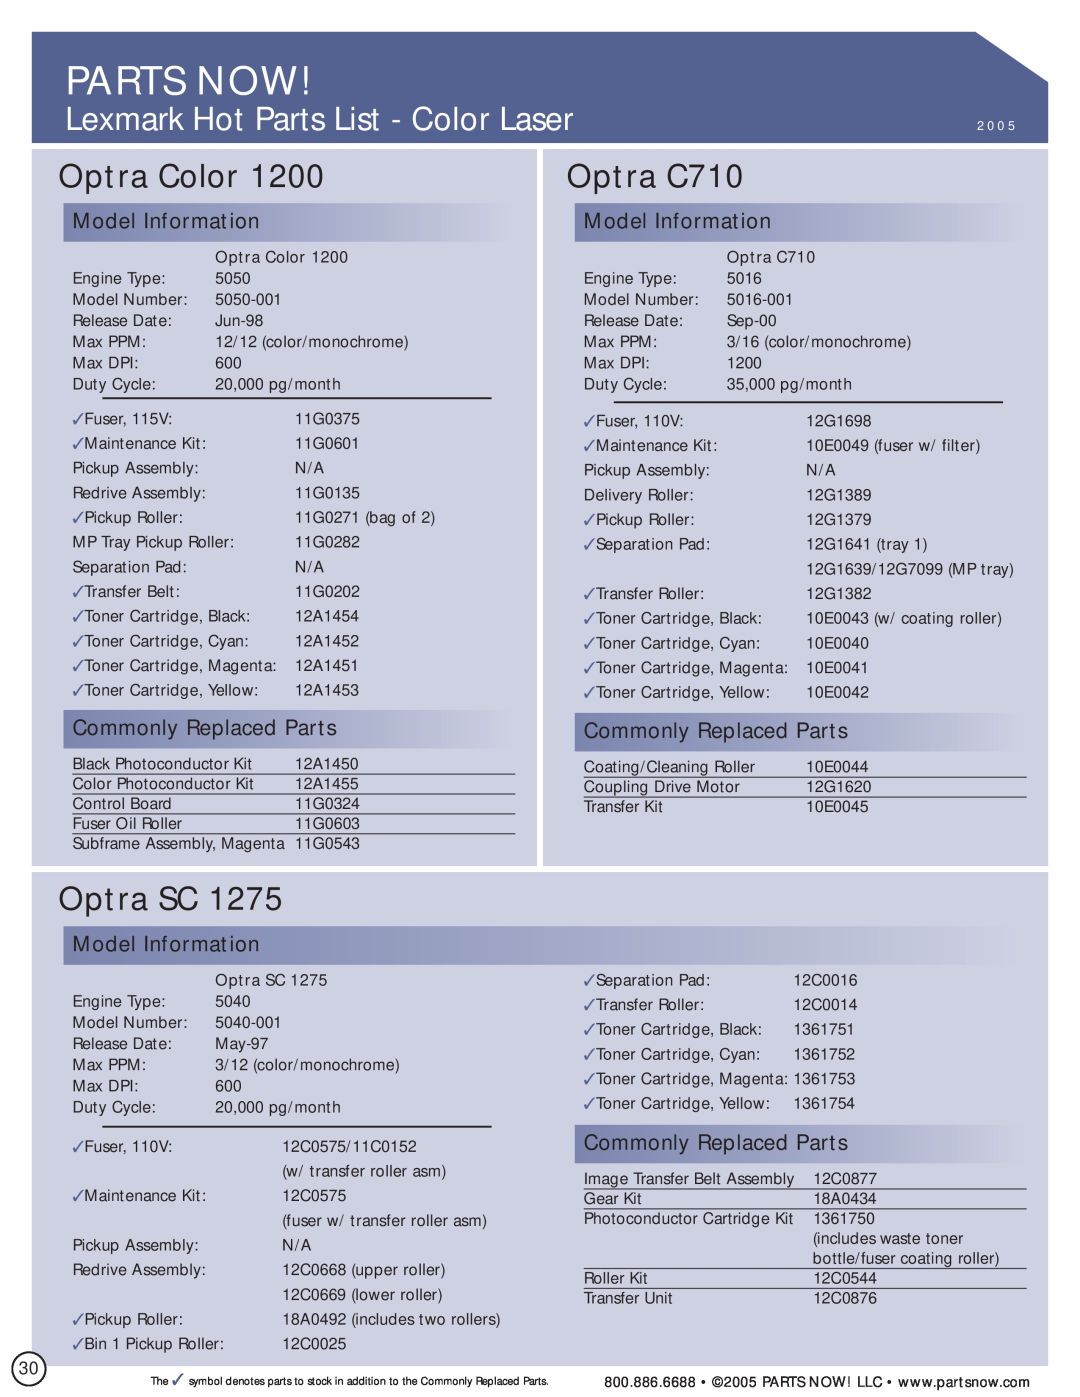 Lexmark SC 1275 manual Parts Now, Lexmark Hot Parts List - Color Laser, Optra Color, Optra C710, Optra SC 